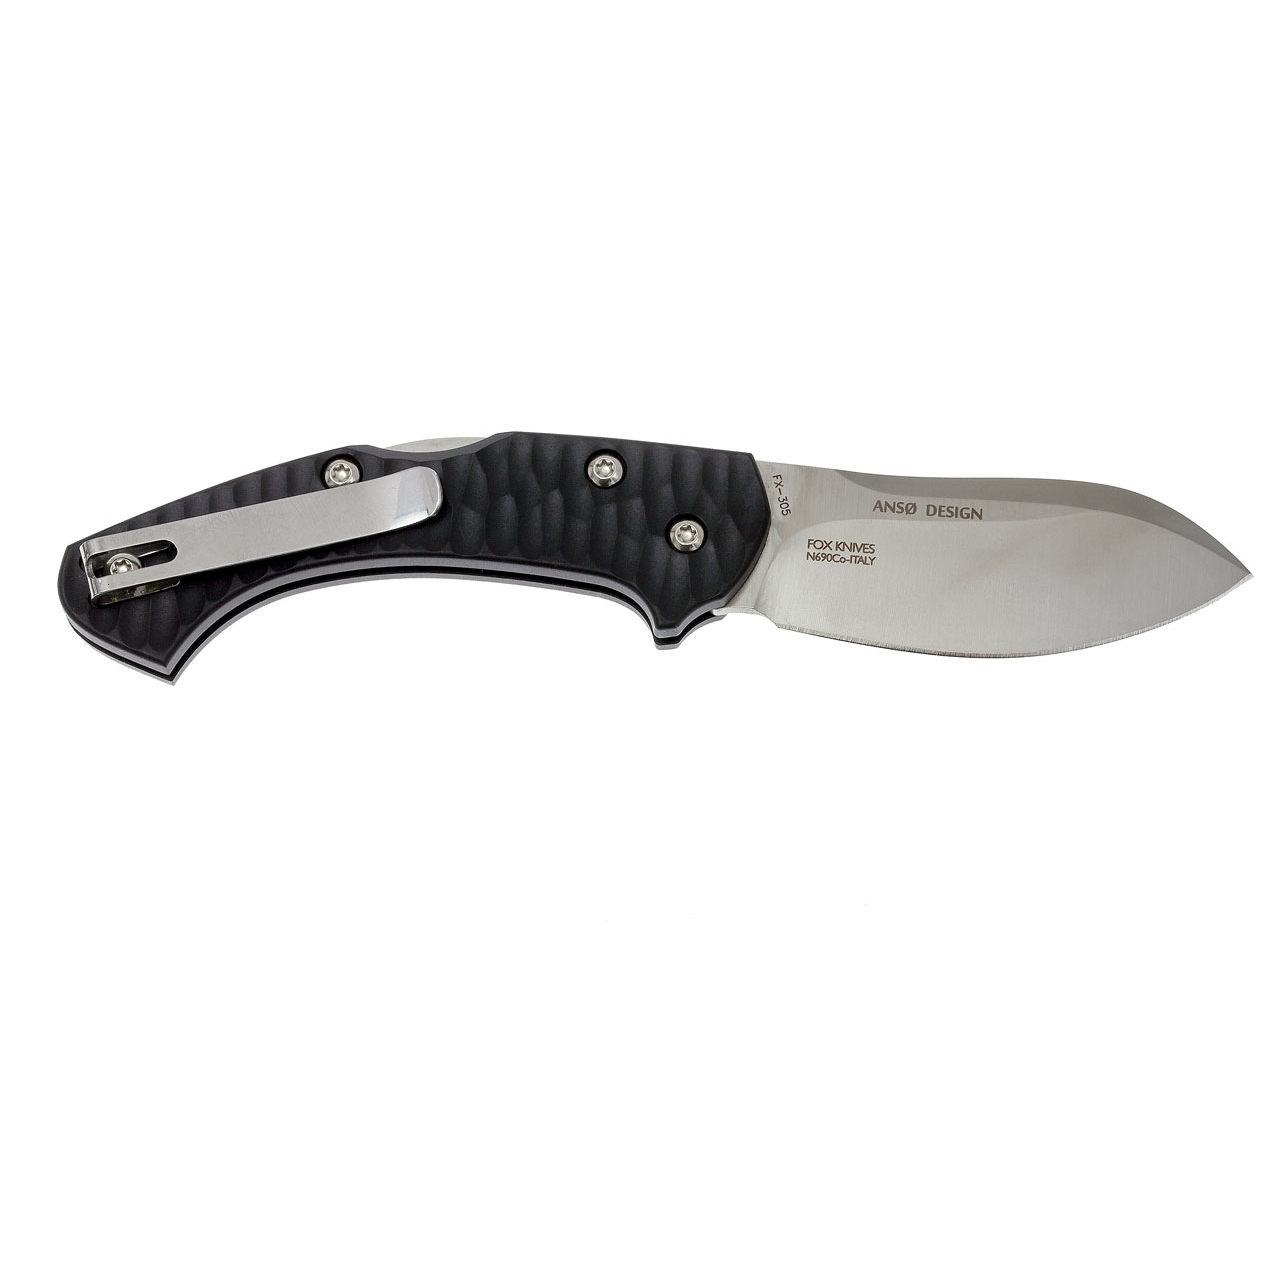 Складной нож Fox Jens Anso Design, сталь N690, рукоять термопластик FRN, черный - фото 3